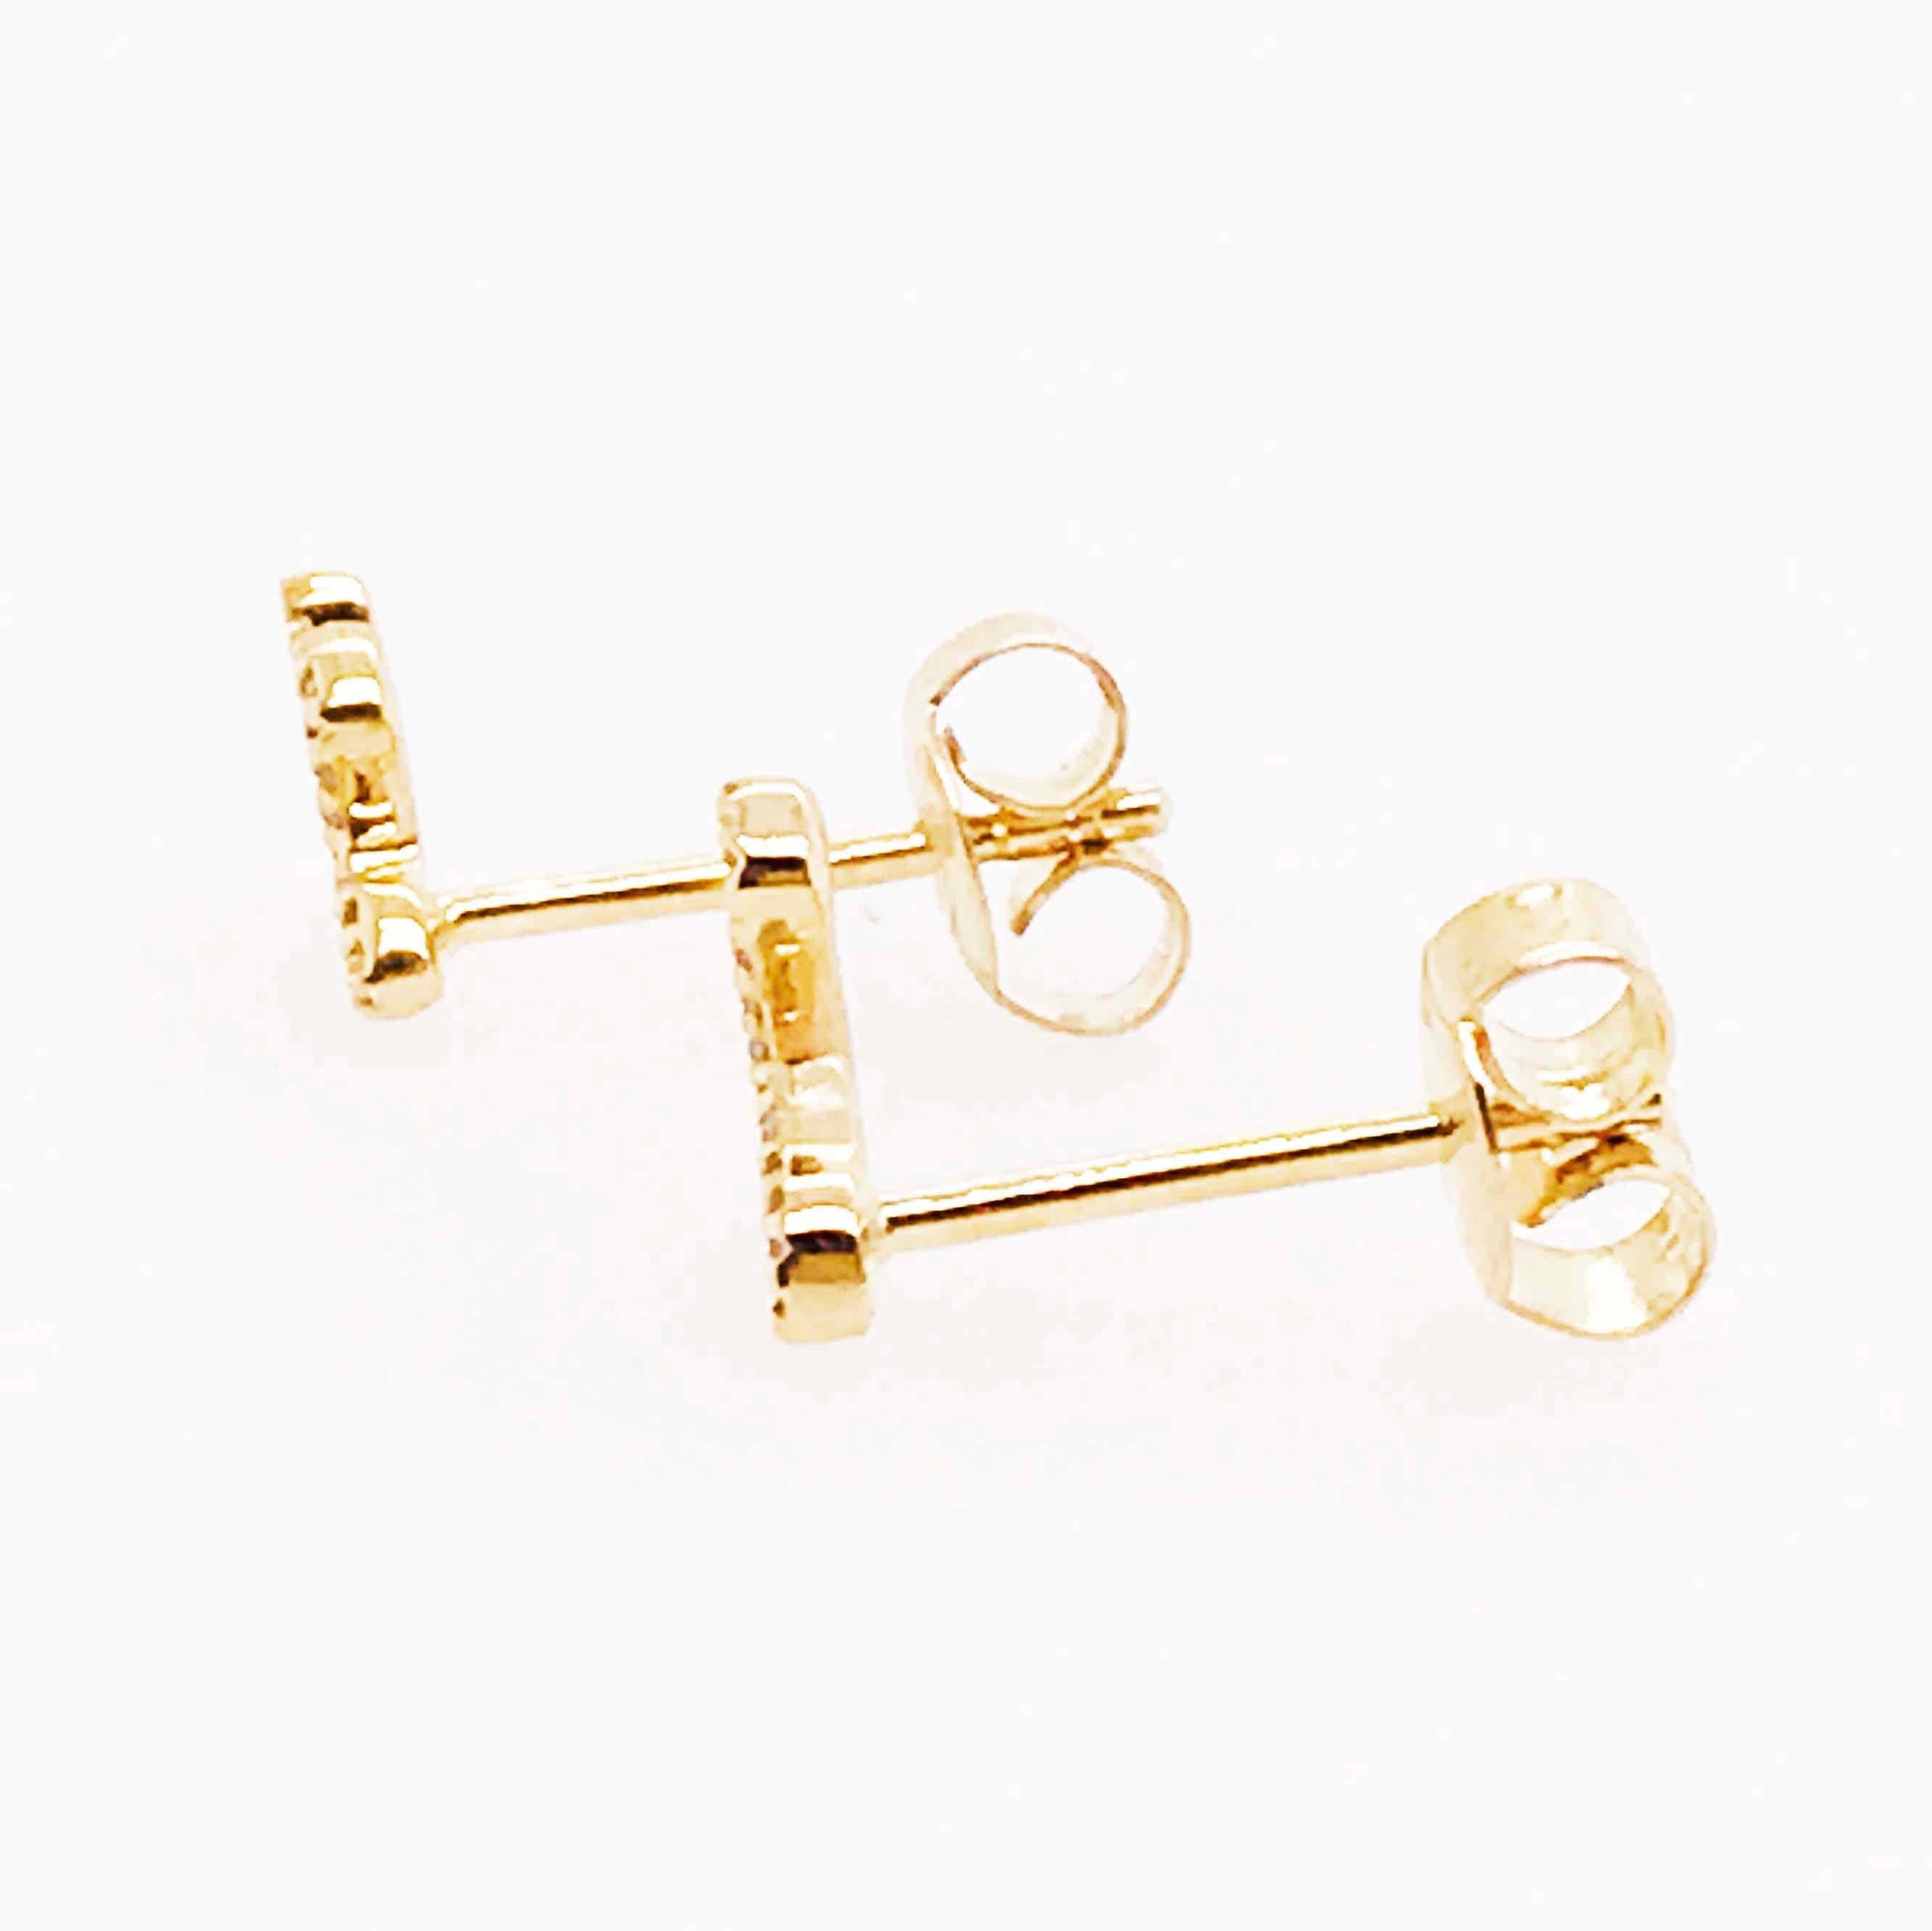 Modern Diamond Snake Earrings, Pave Diamond Serpent Earring Studs in Yellow Gold